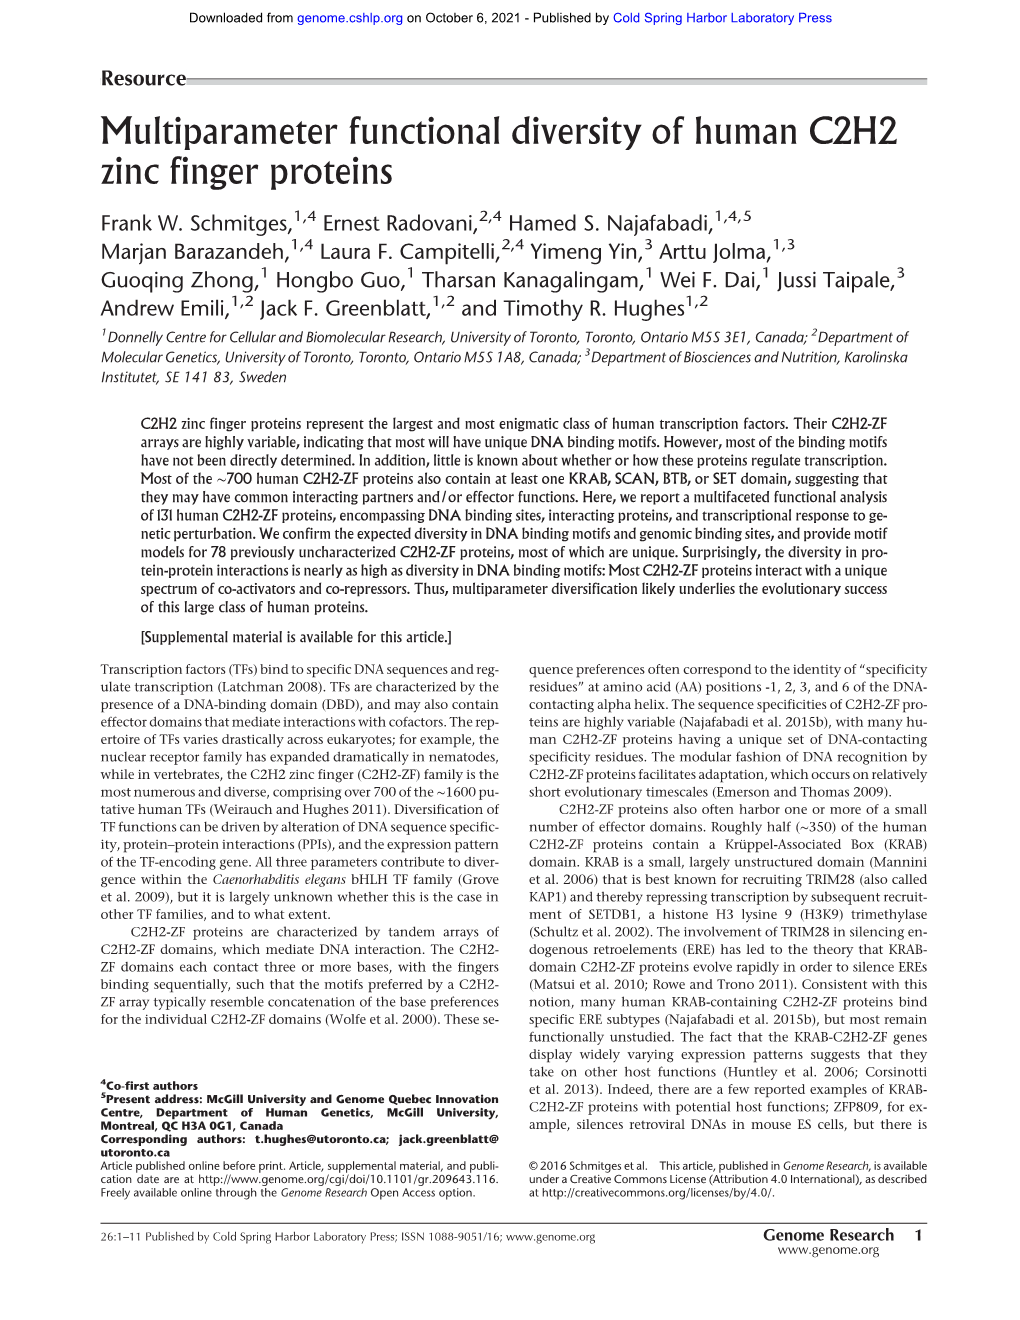 Multiparameter Functional Diversity of Human C2H2 Zinc Finger Proteins